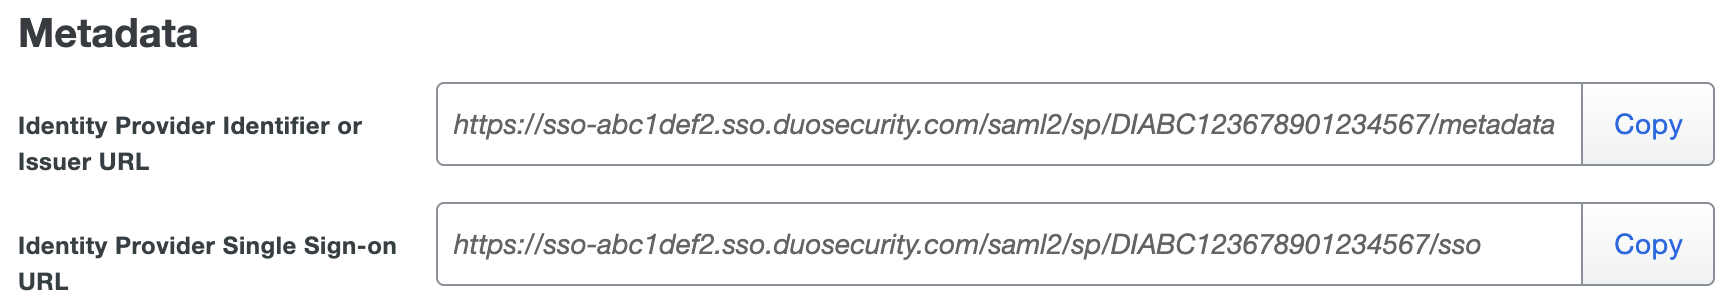 Duo Hubspot Metadata URLs